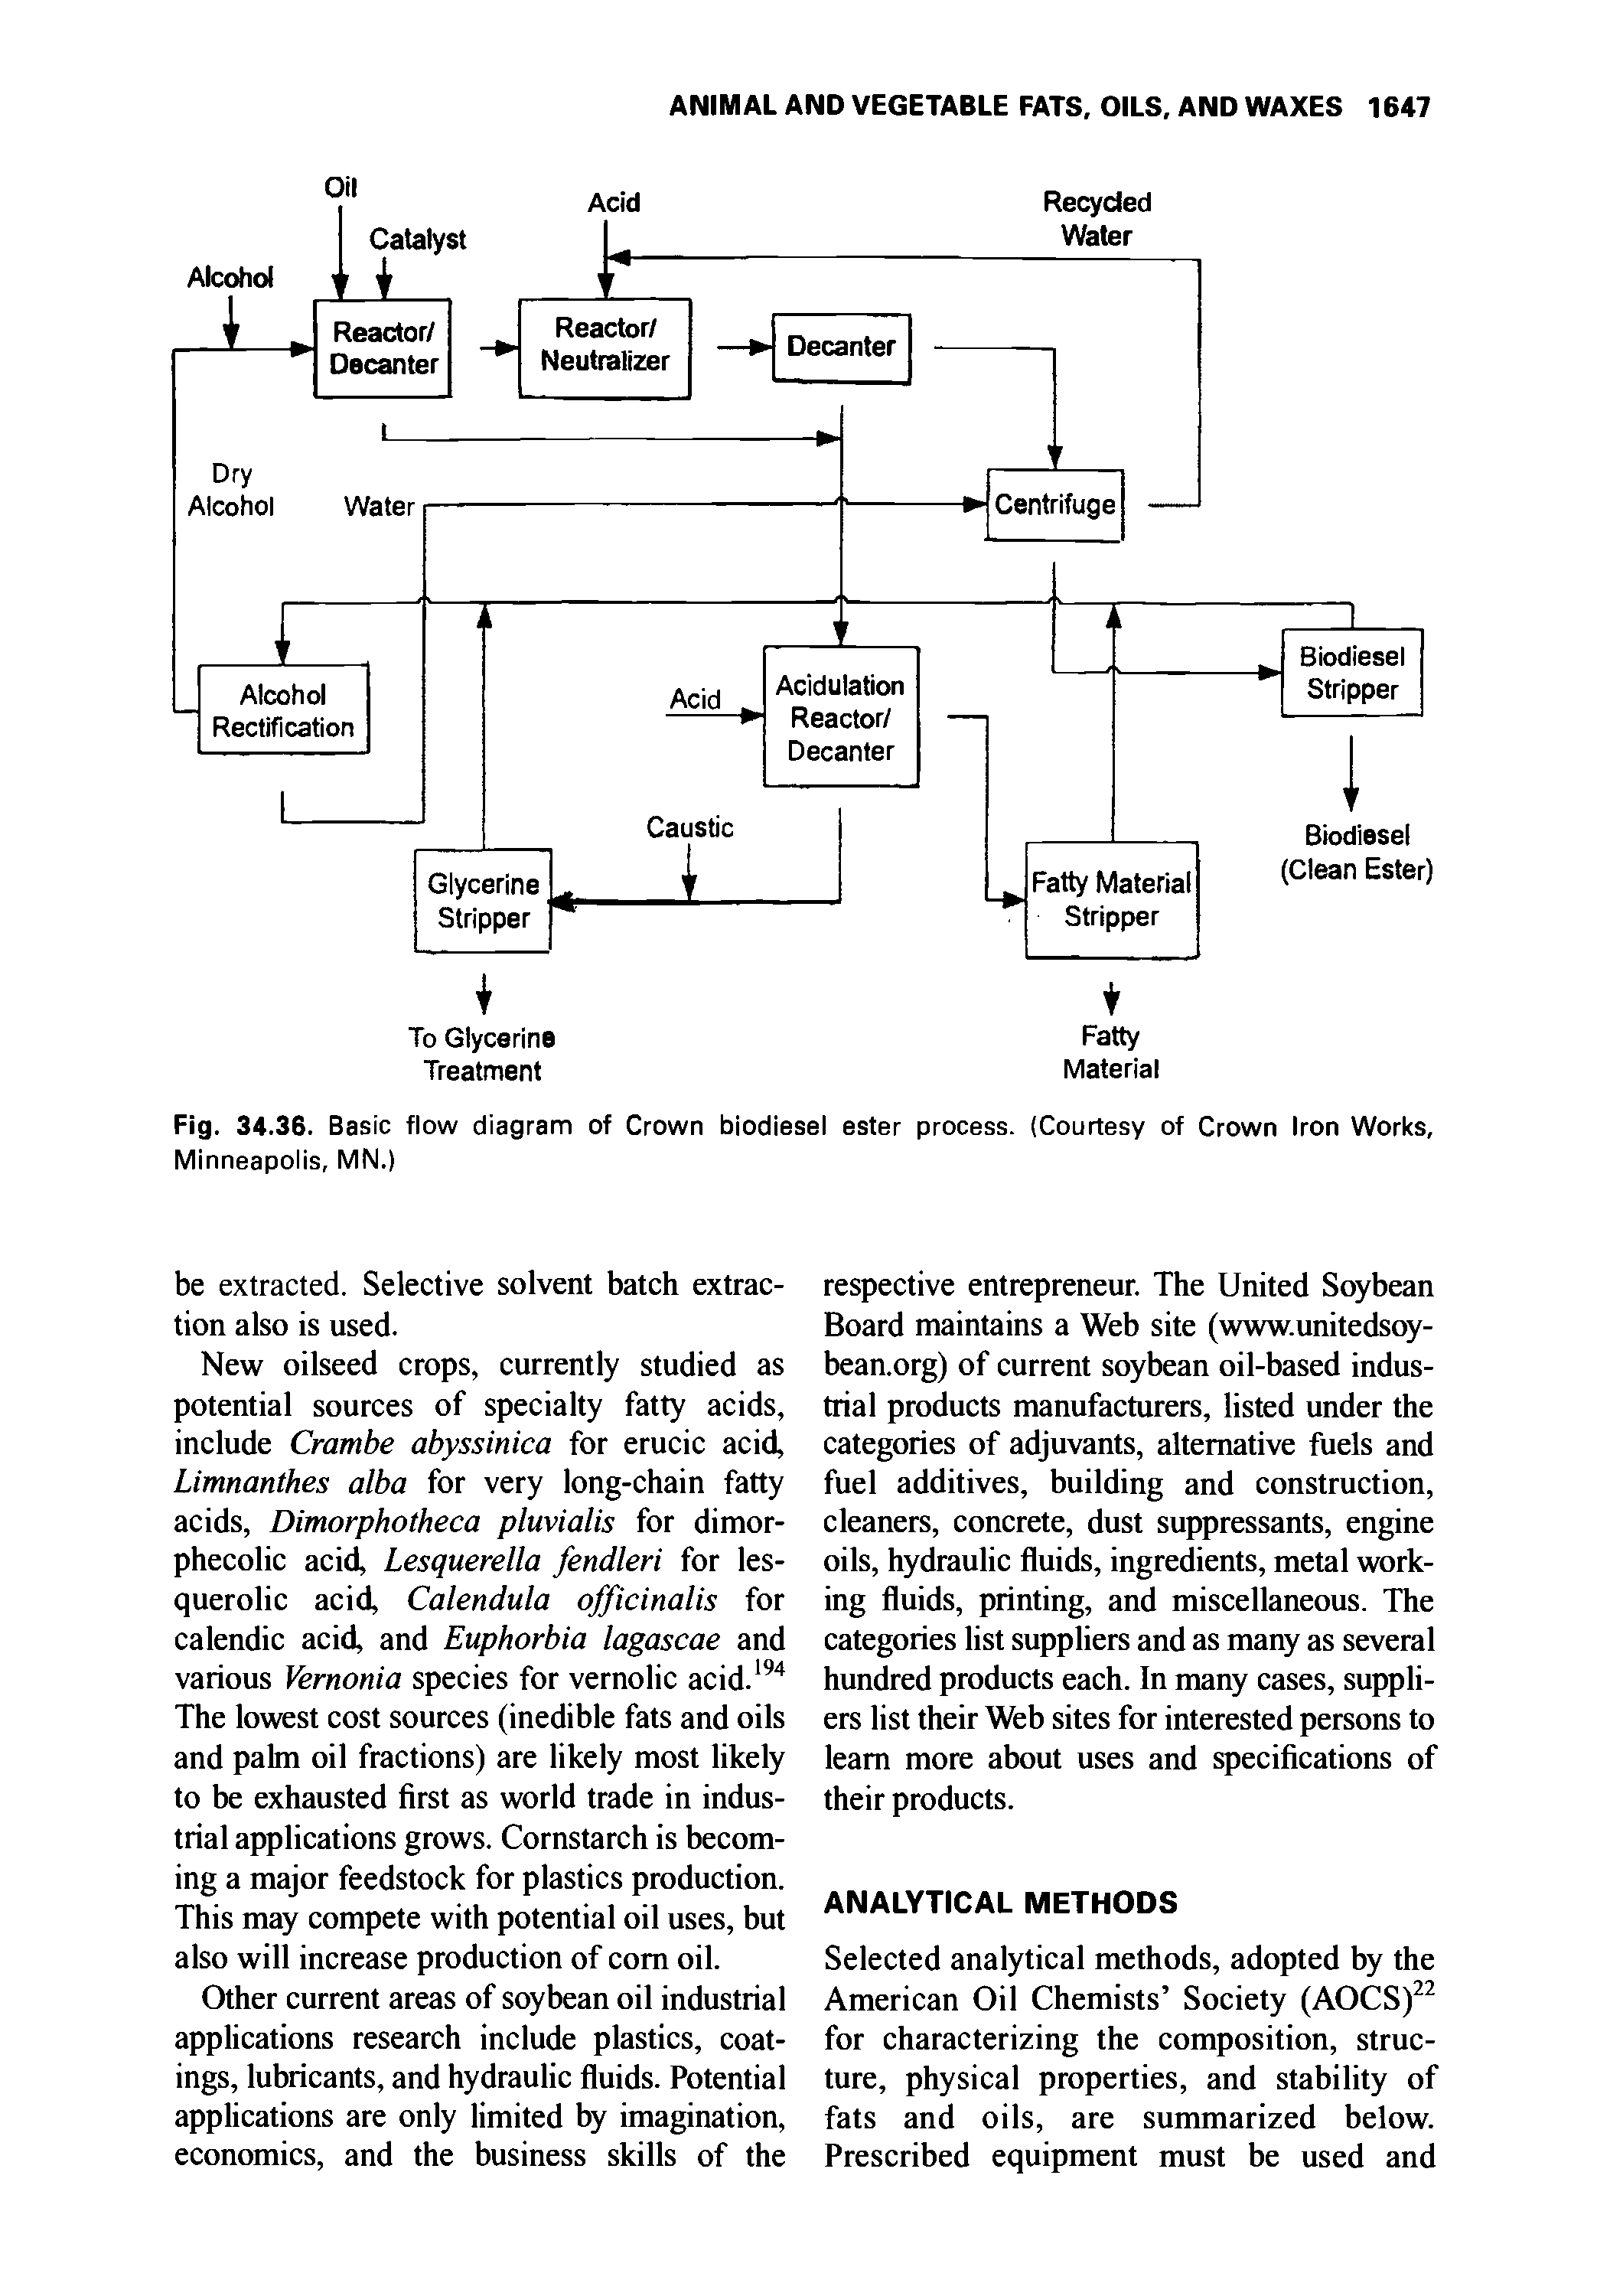 Fig. 34.36. Basic flow diagram of Crown biodiesel ester process. (Courtesy of Crown Iron Works, Minneapolis, MN.)...